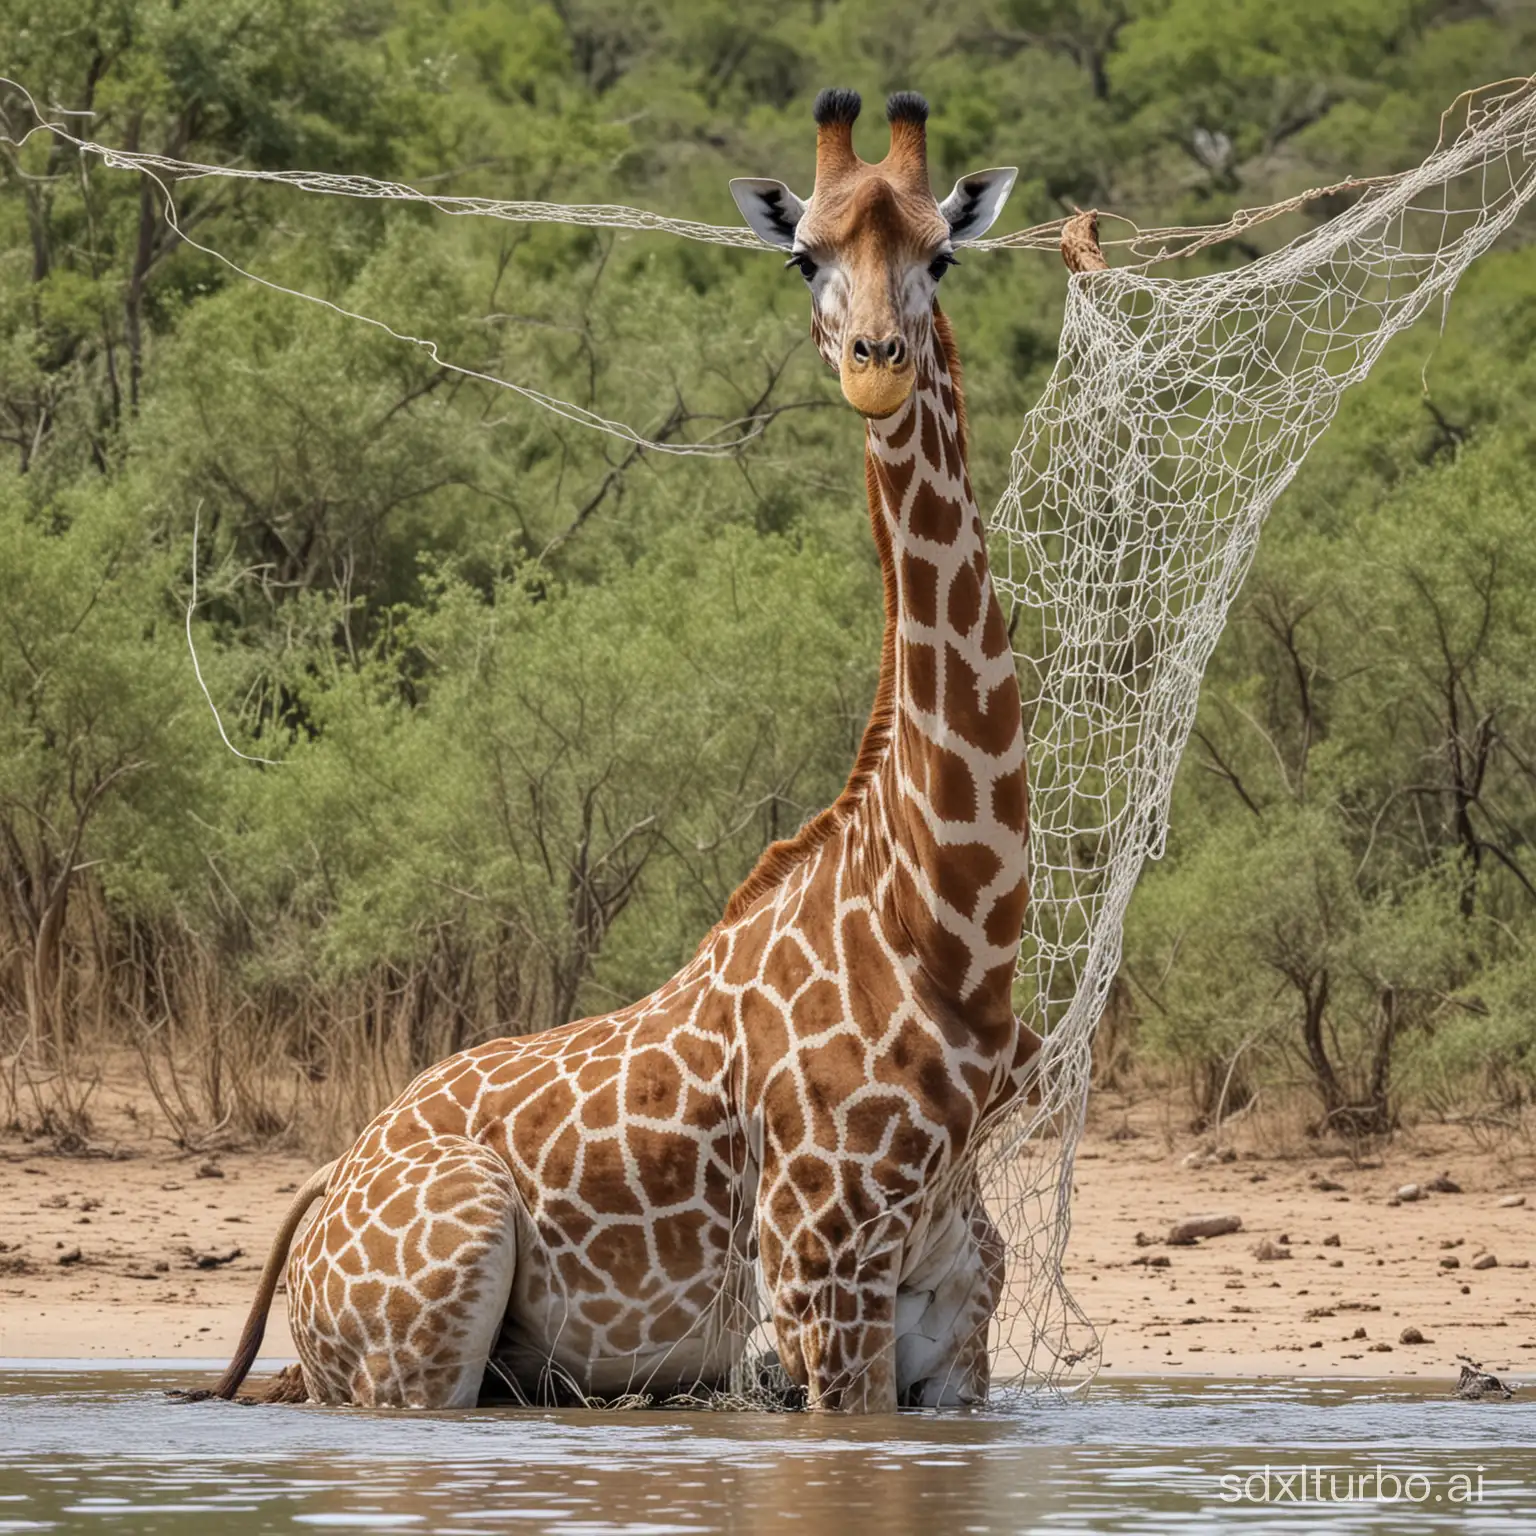 giraffe caught in a fishing net